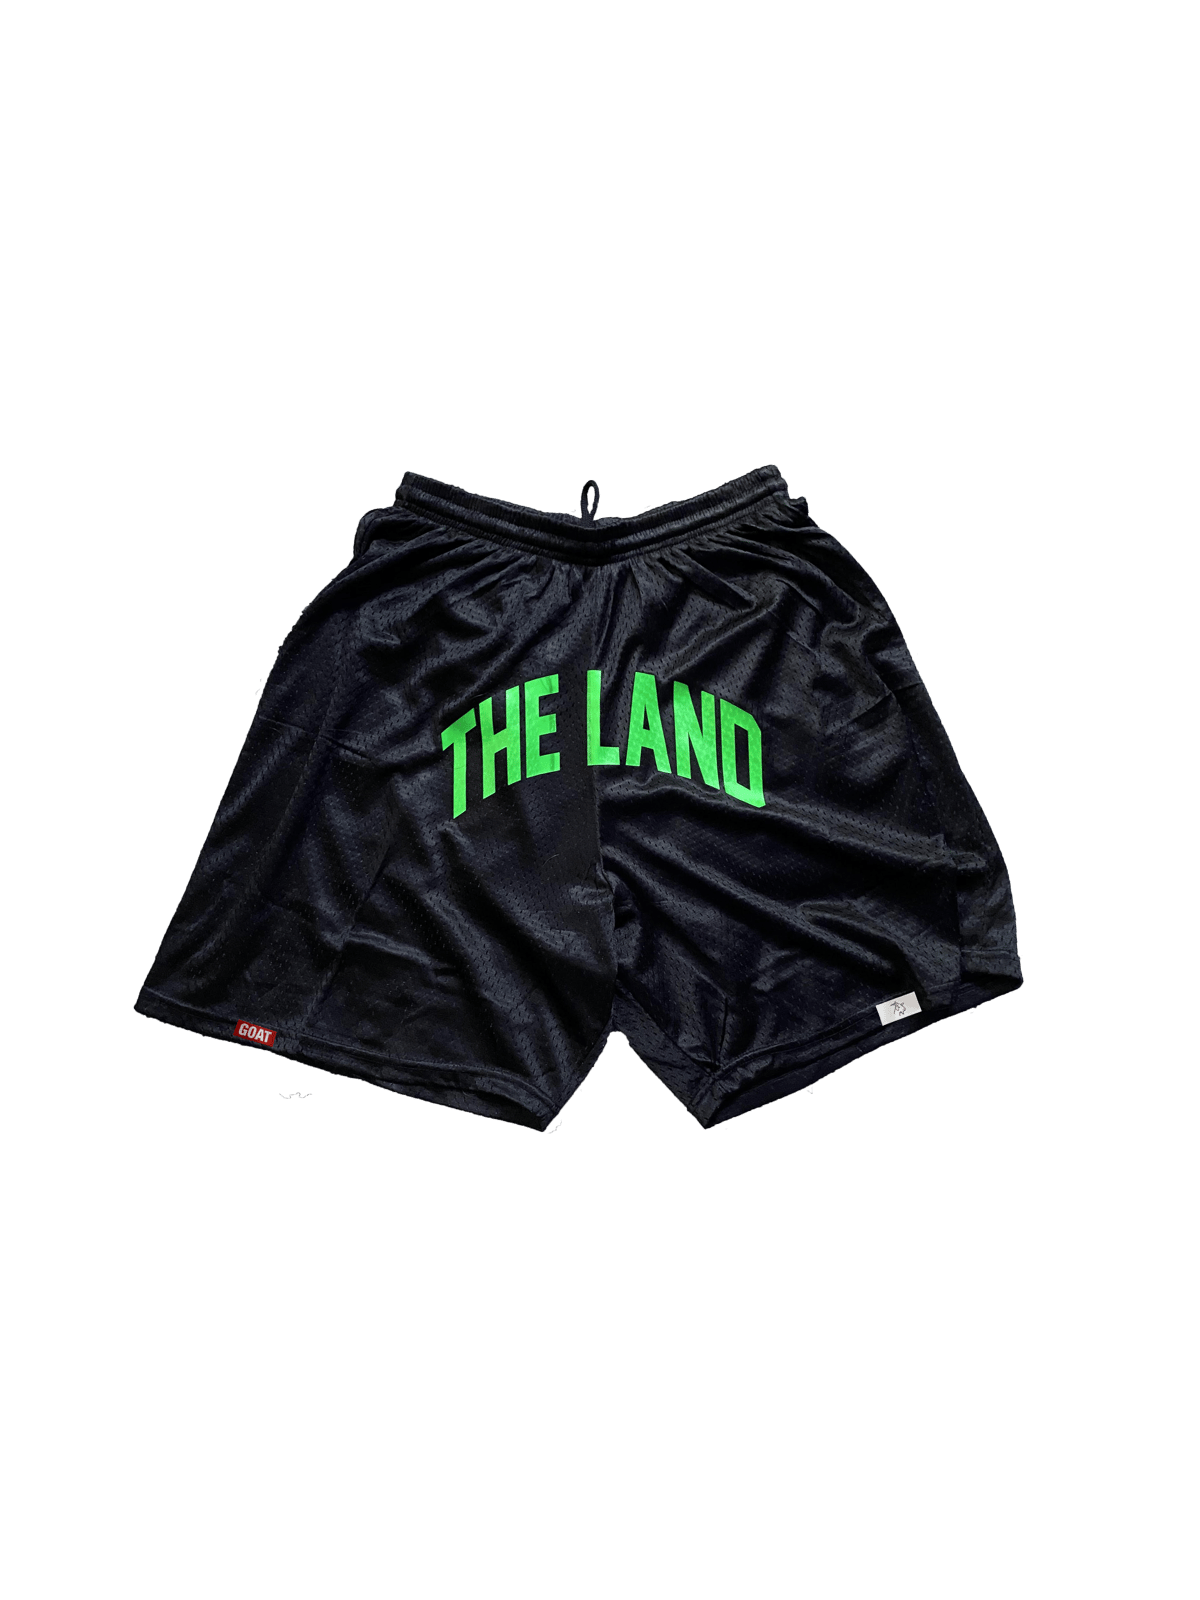 THE LAND Black/Neon Shorts